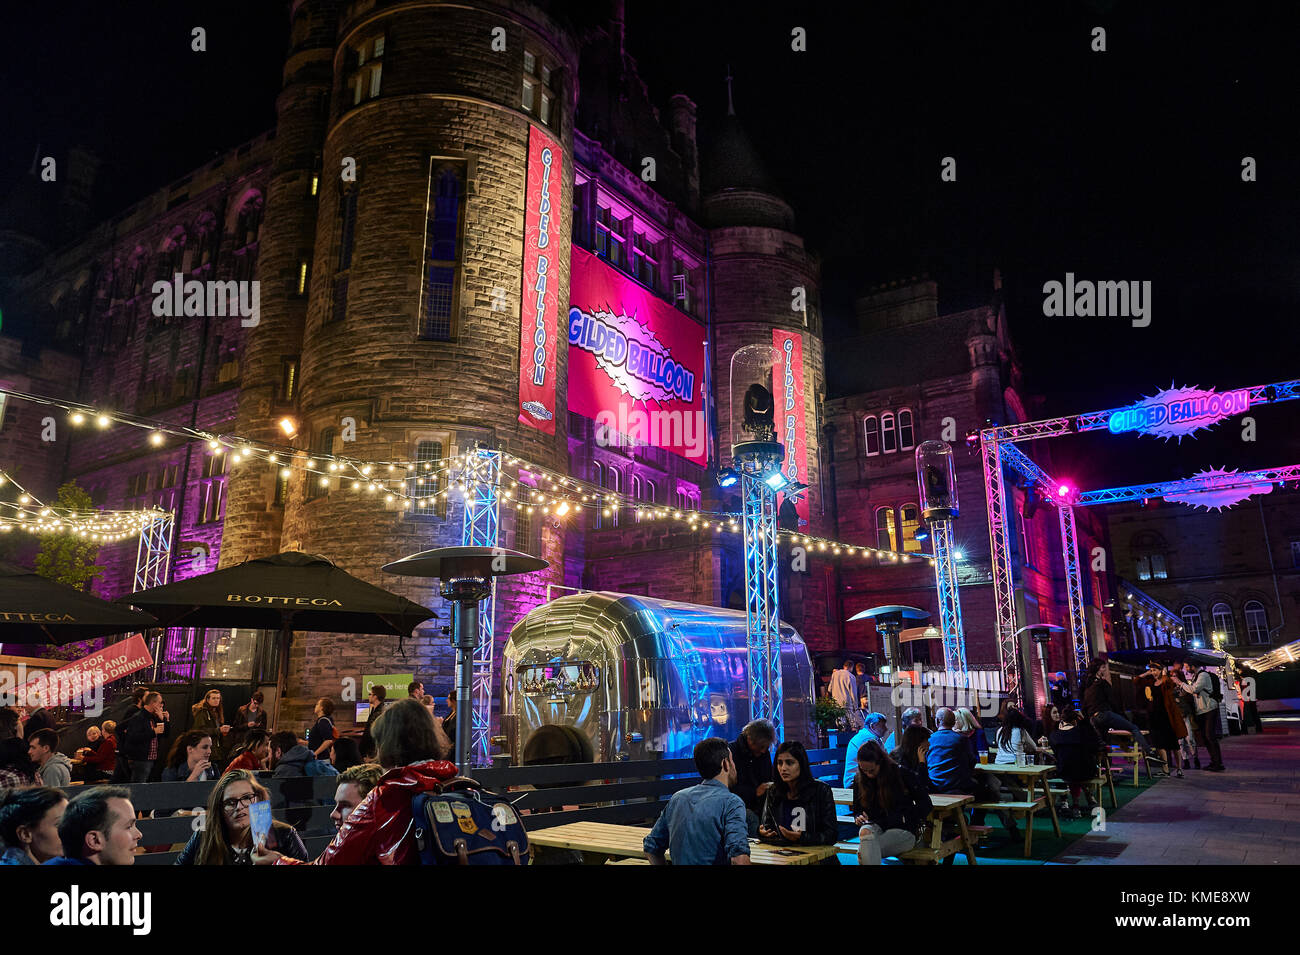 Gilded Balloon venue at Teviot Row House during Edinburgh Festival at night Stock Photo